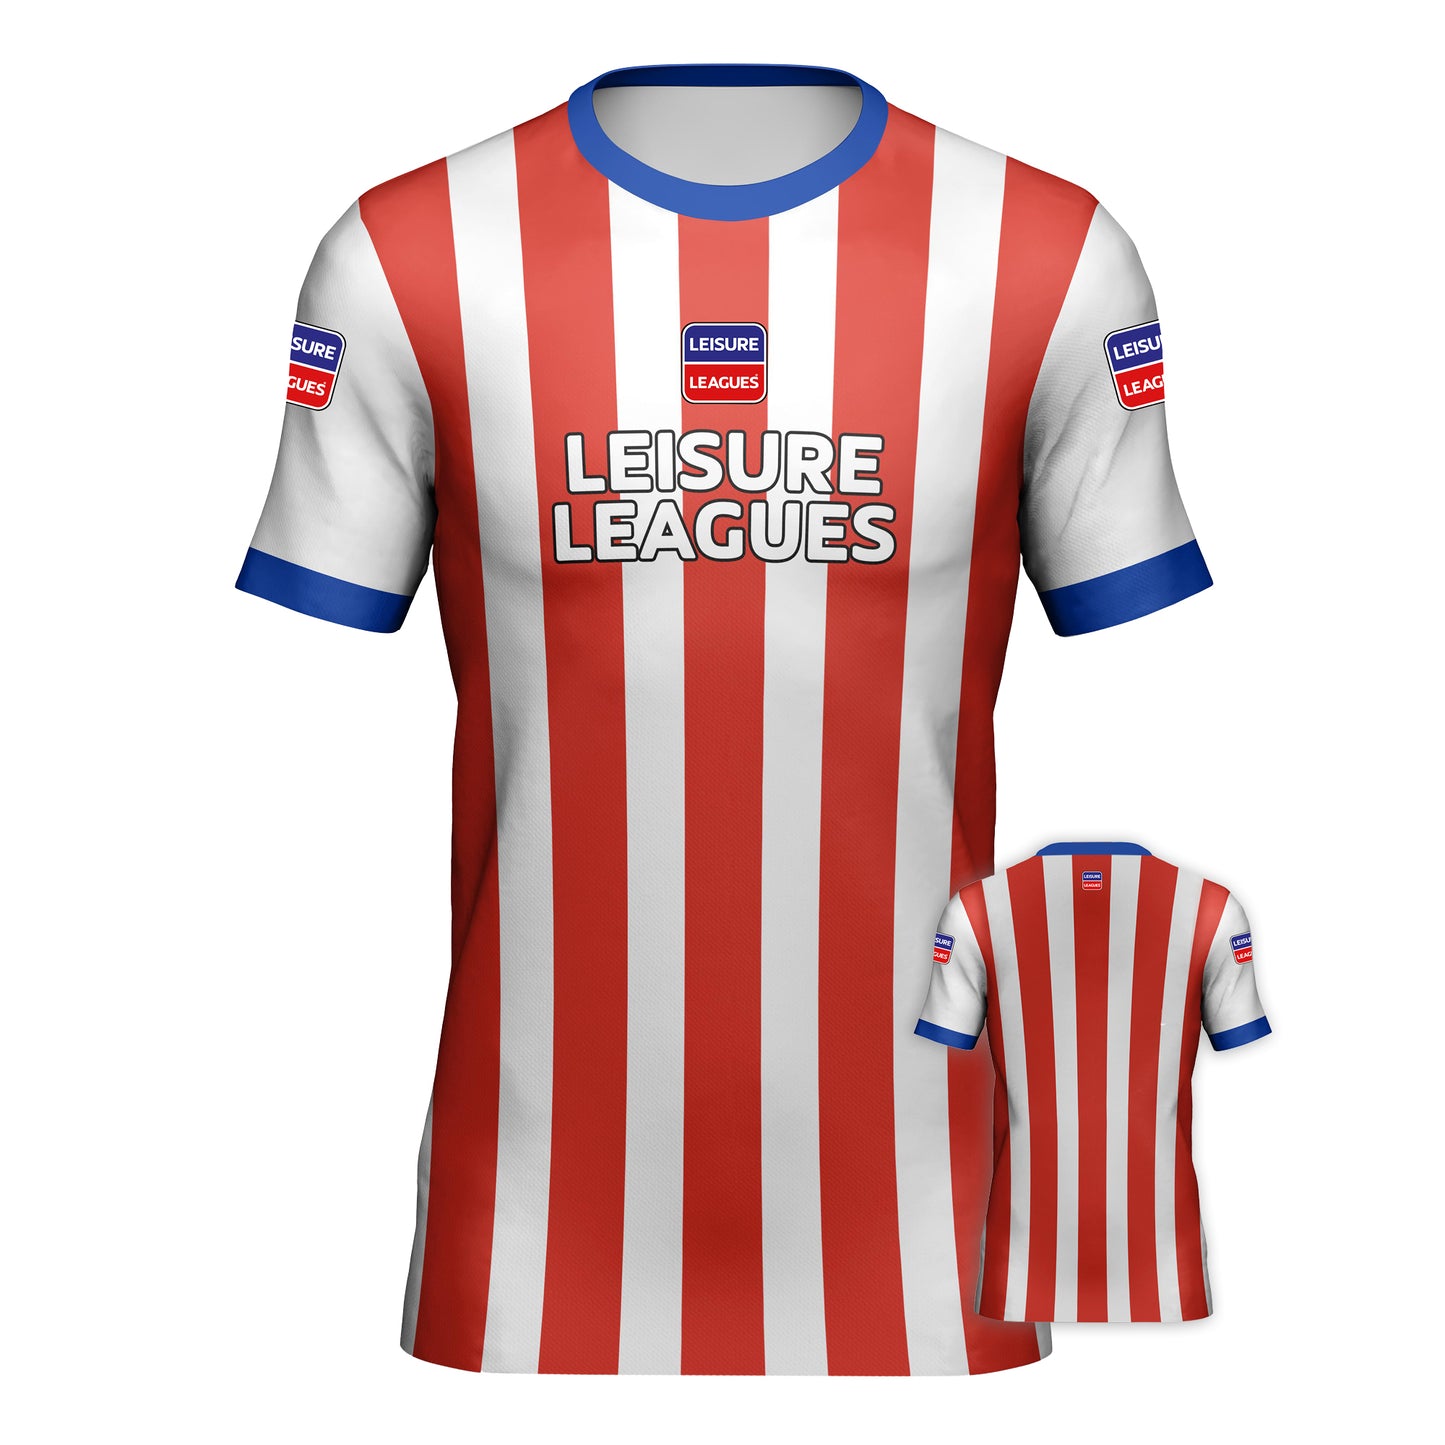 Football Shirt Leisure Leagues Kit Team Tshirt Athletico Red & White